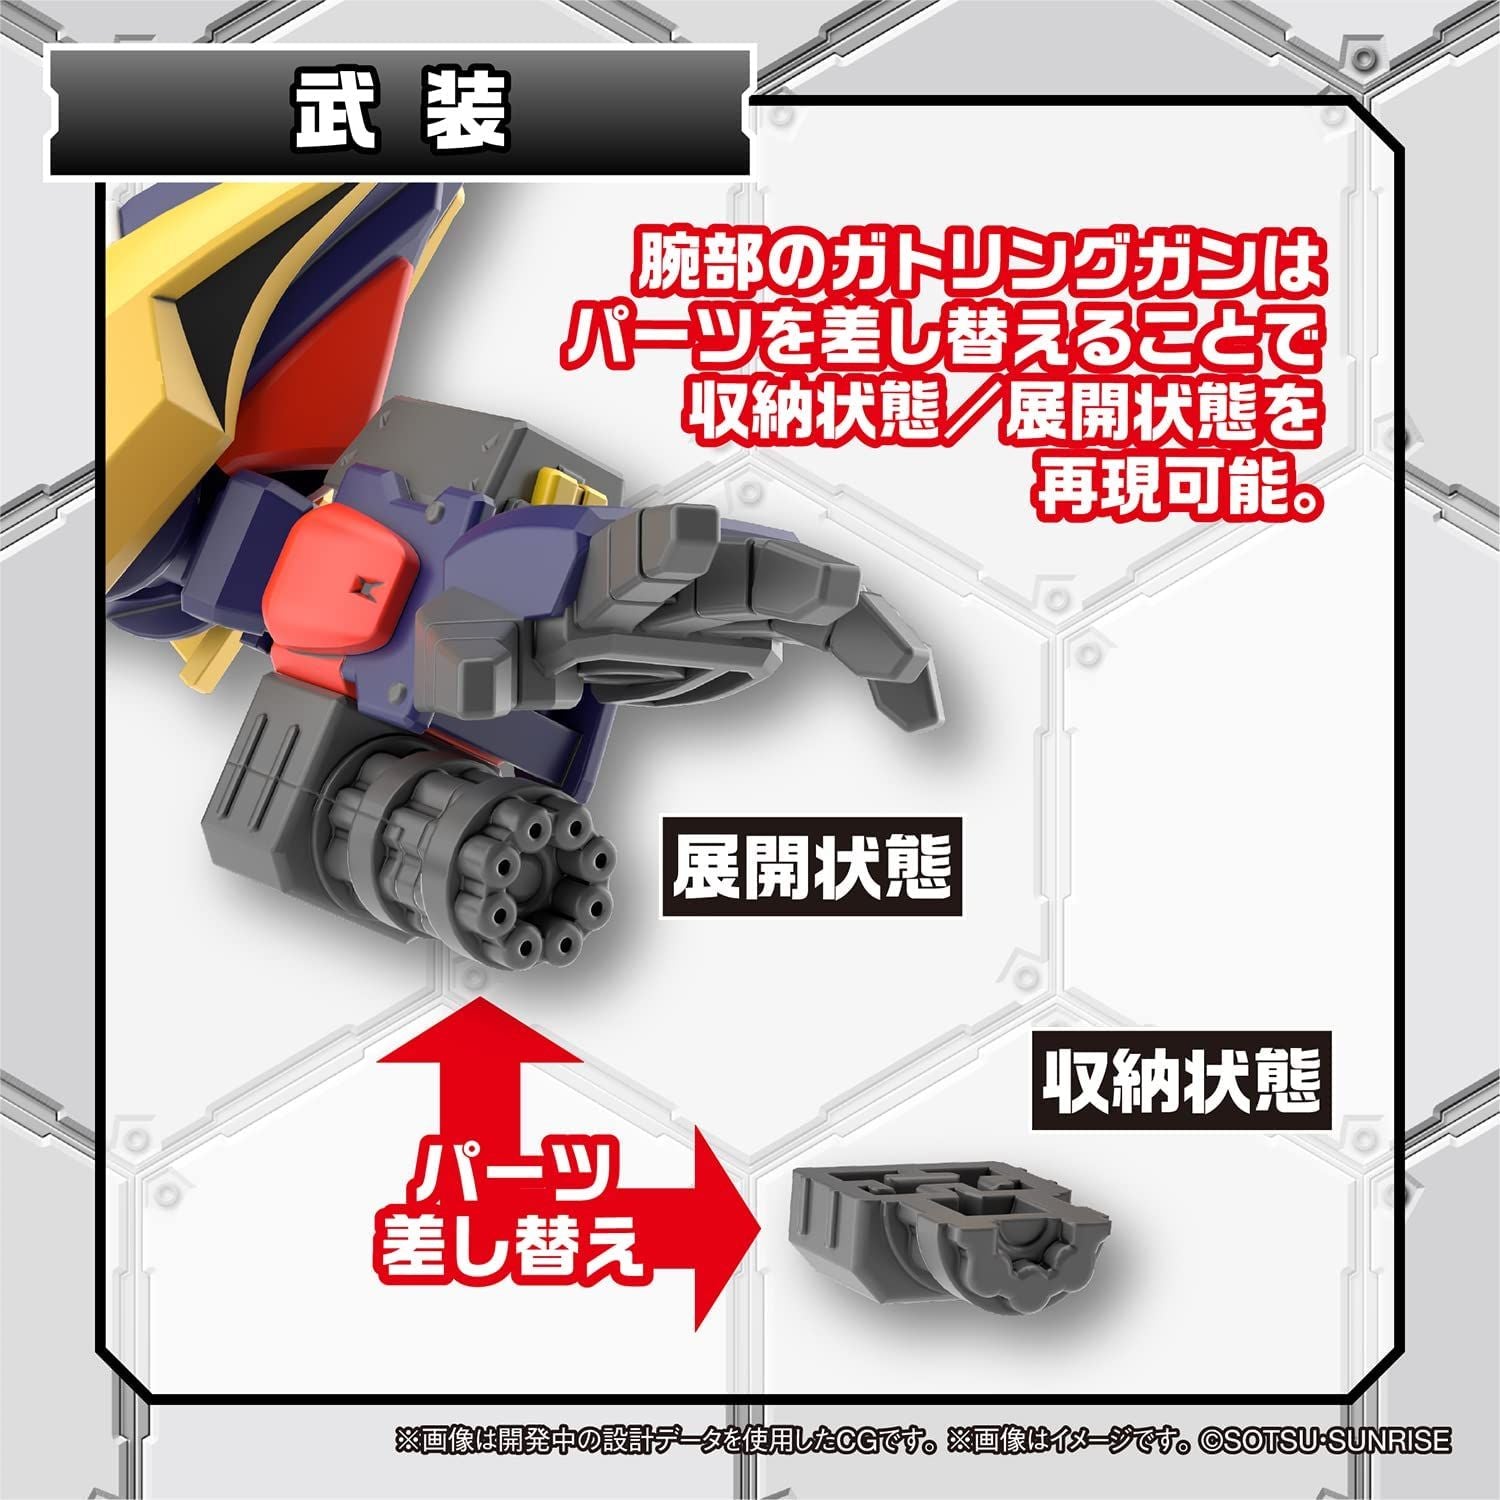 Bandai SD Gundam Cross Silhouette Tornado Gundam - BanzaiHobby